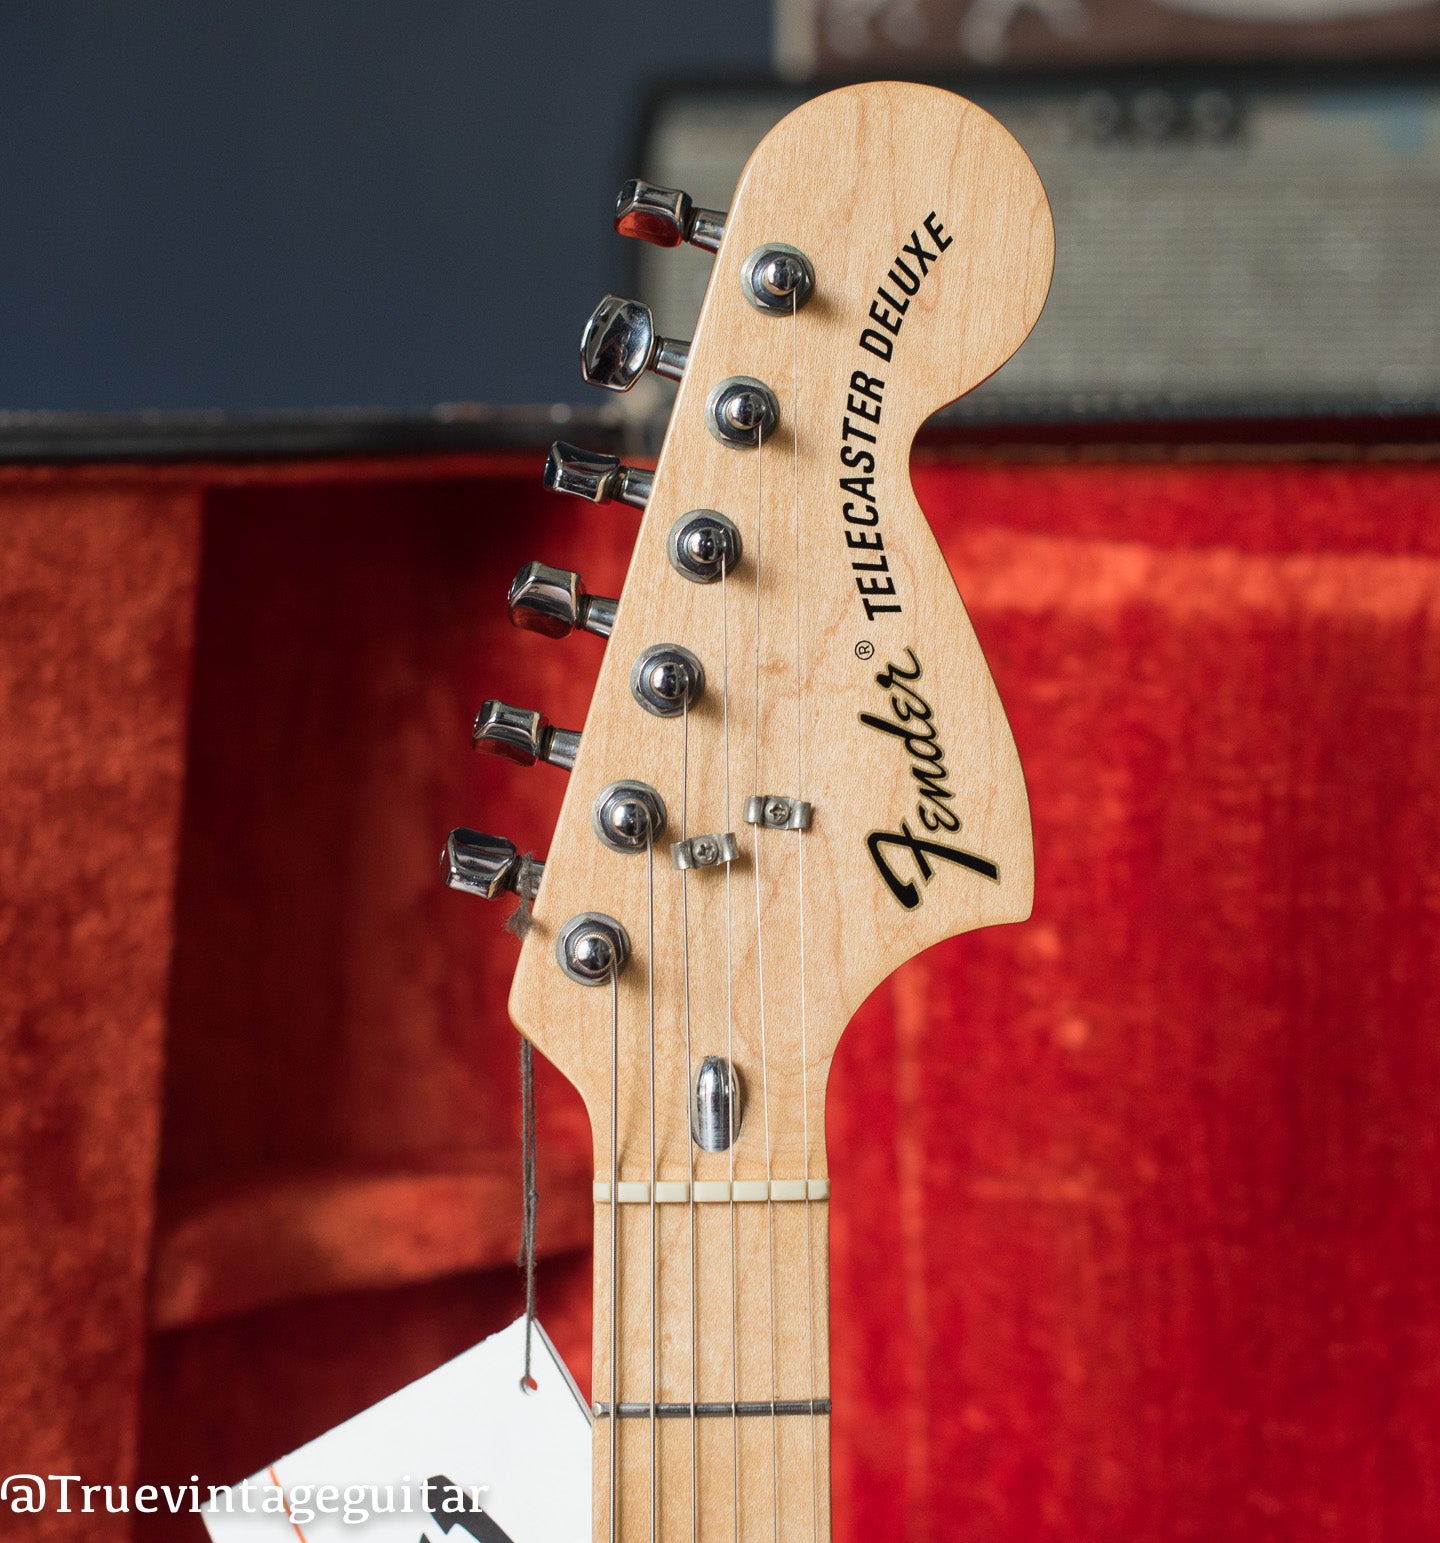 Headstock, vintage 1974 Fender Telecaster Deluxe guitar